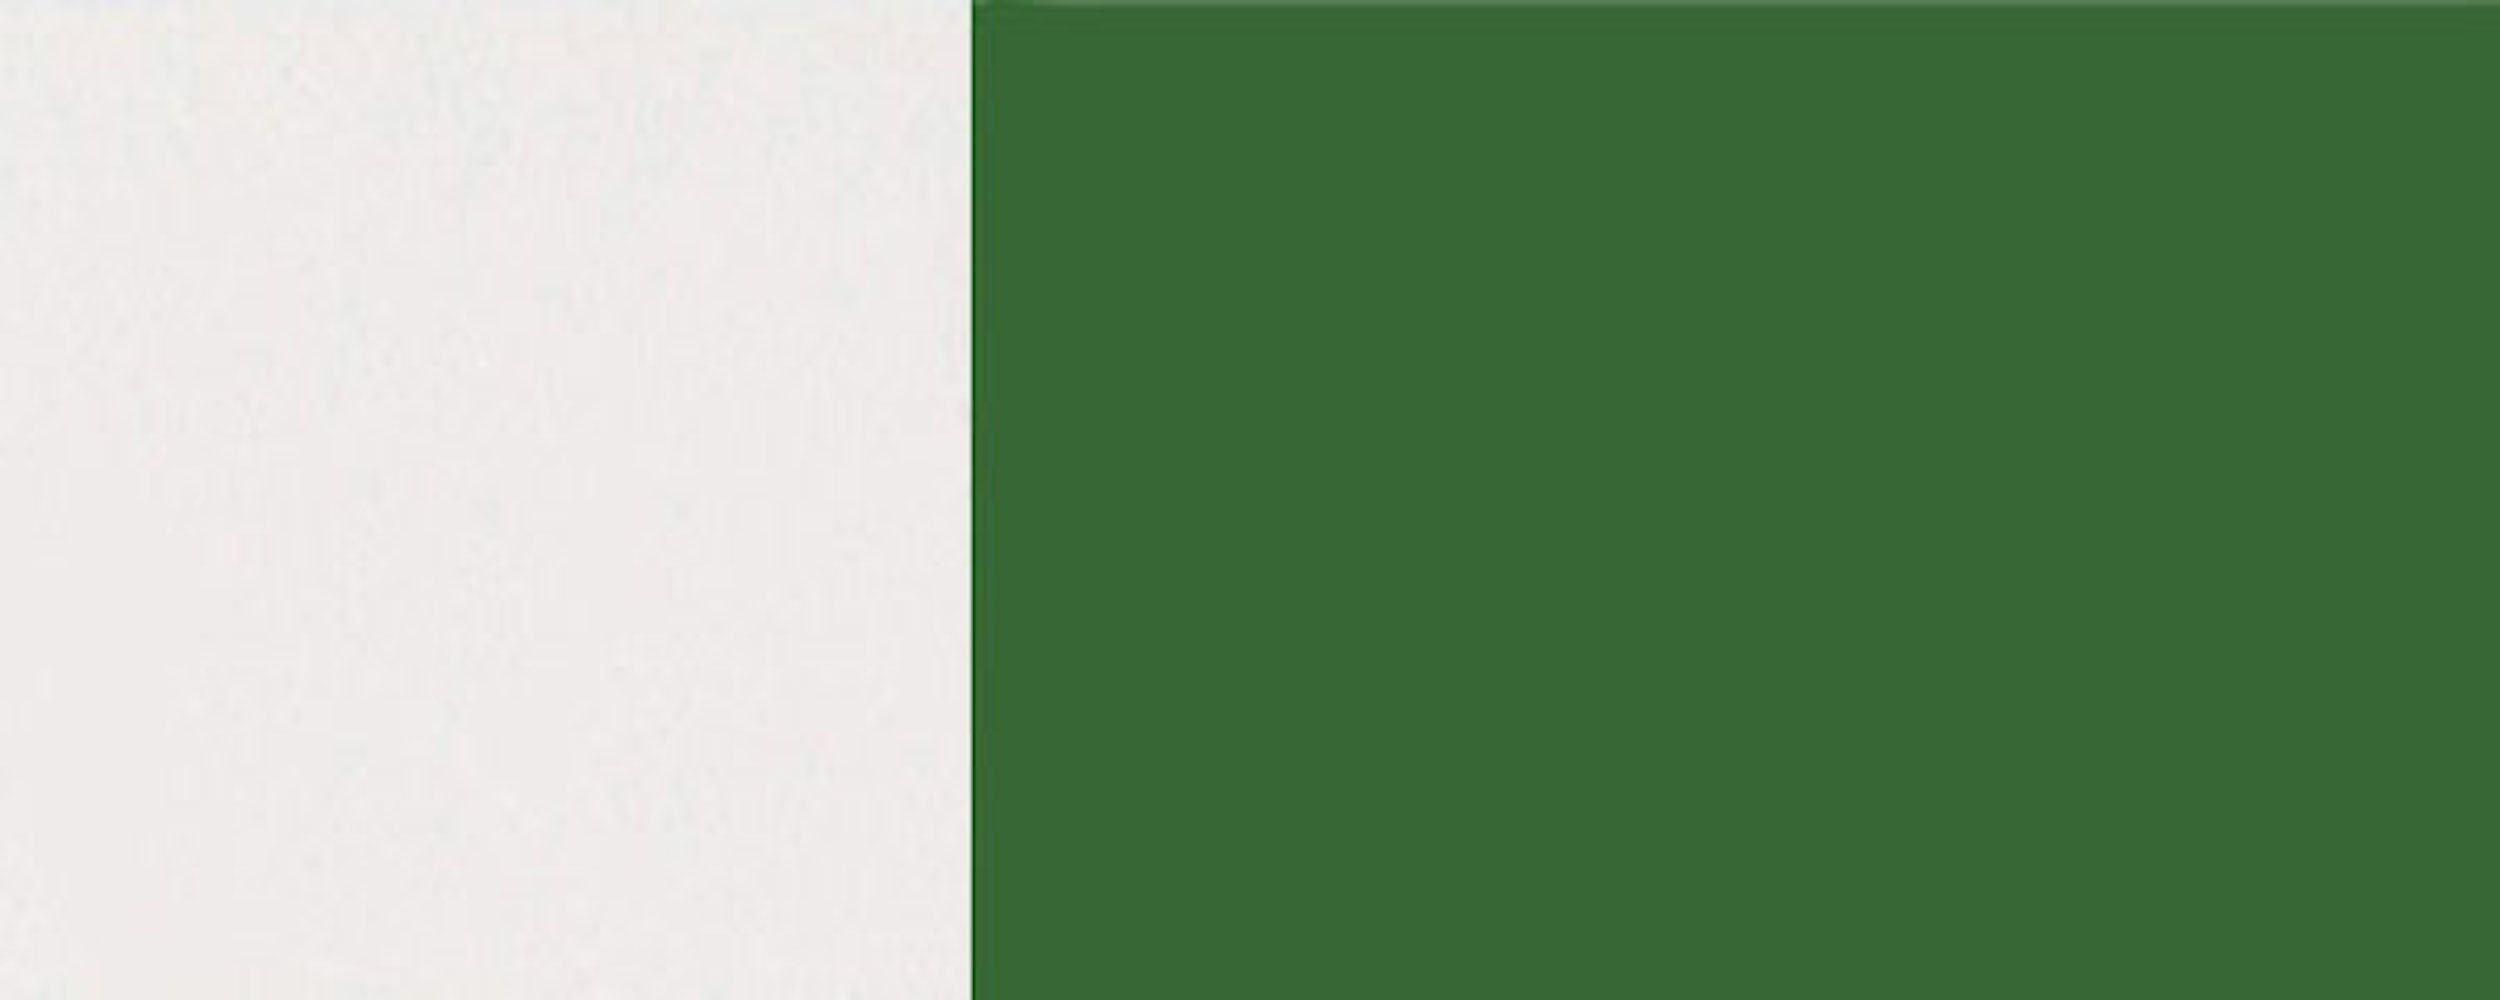 Feldmann-Wohnen Ausführung 45cm (Florence) Front-, Hochglanz smaragdgrün wählbar und Klapphängeschrank 6001 RAL Florence grifflos Korpusfarbe 1-türig